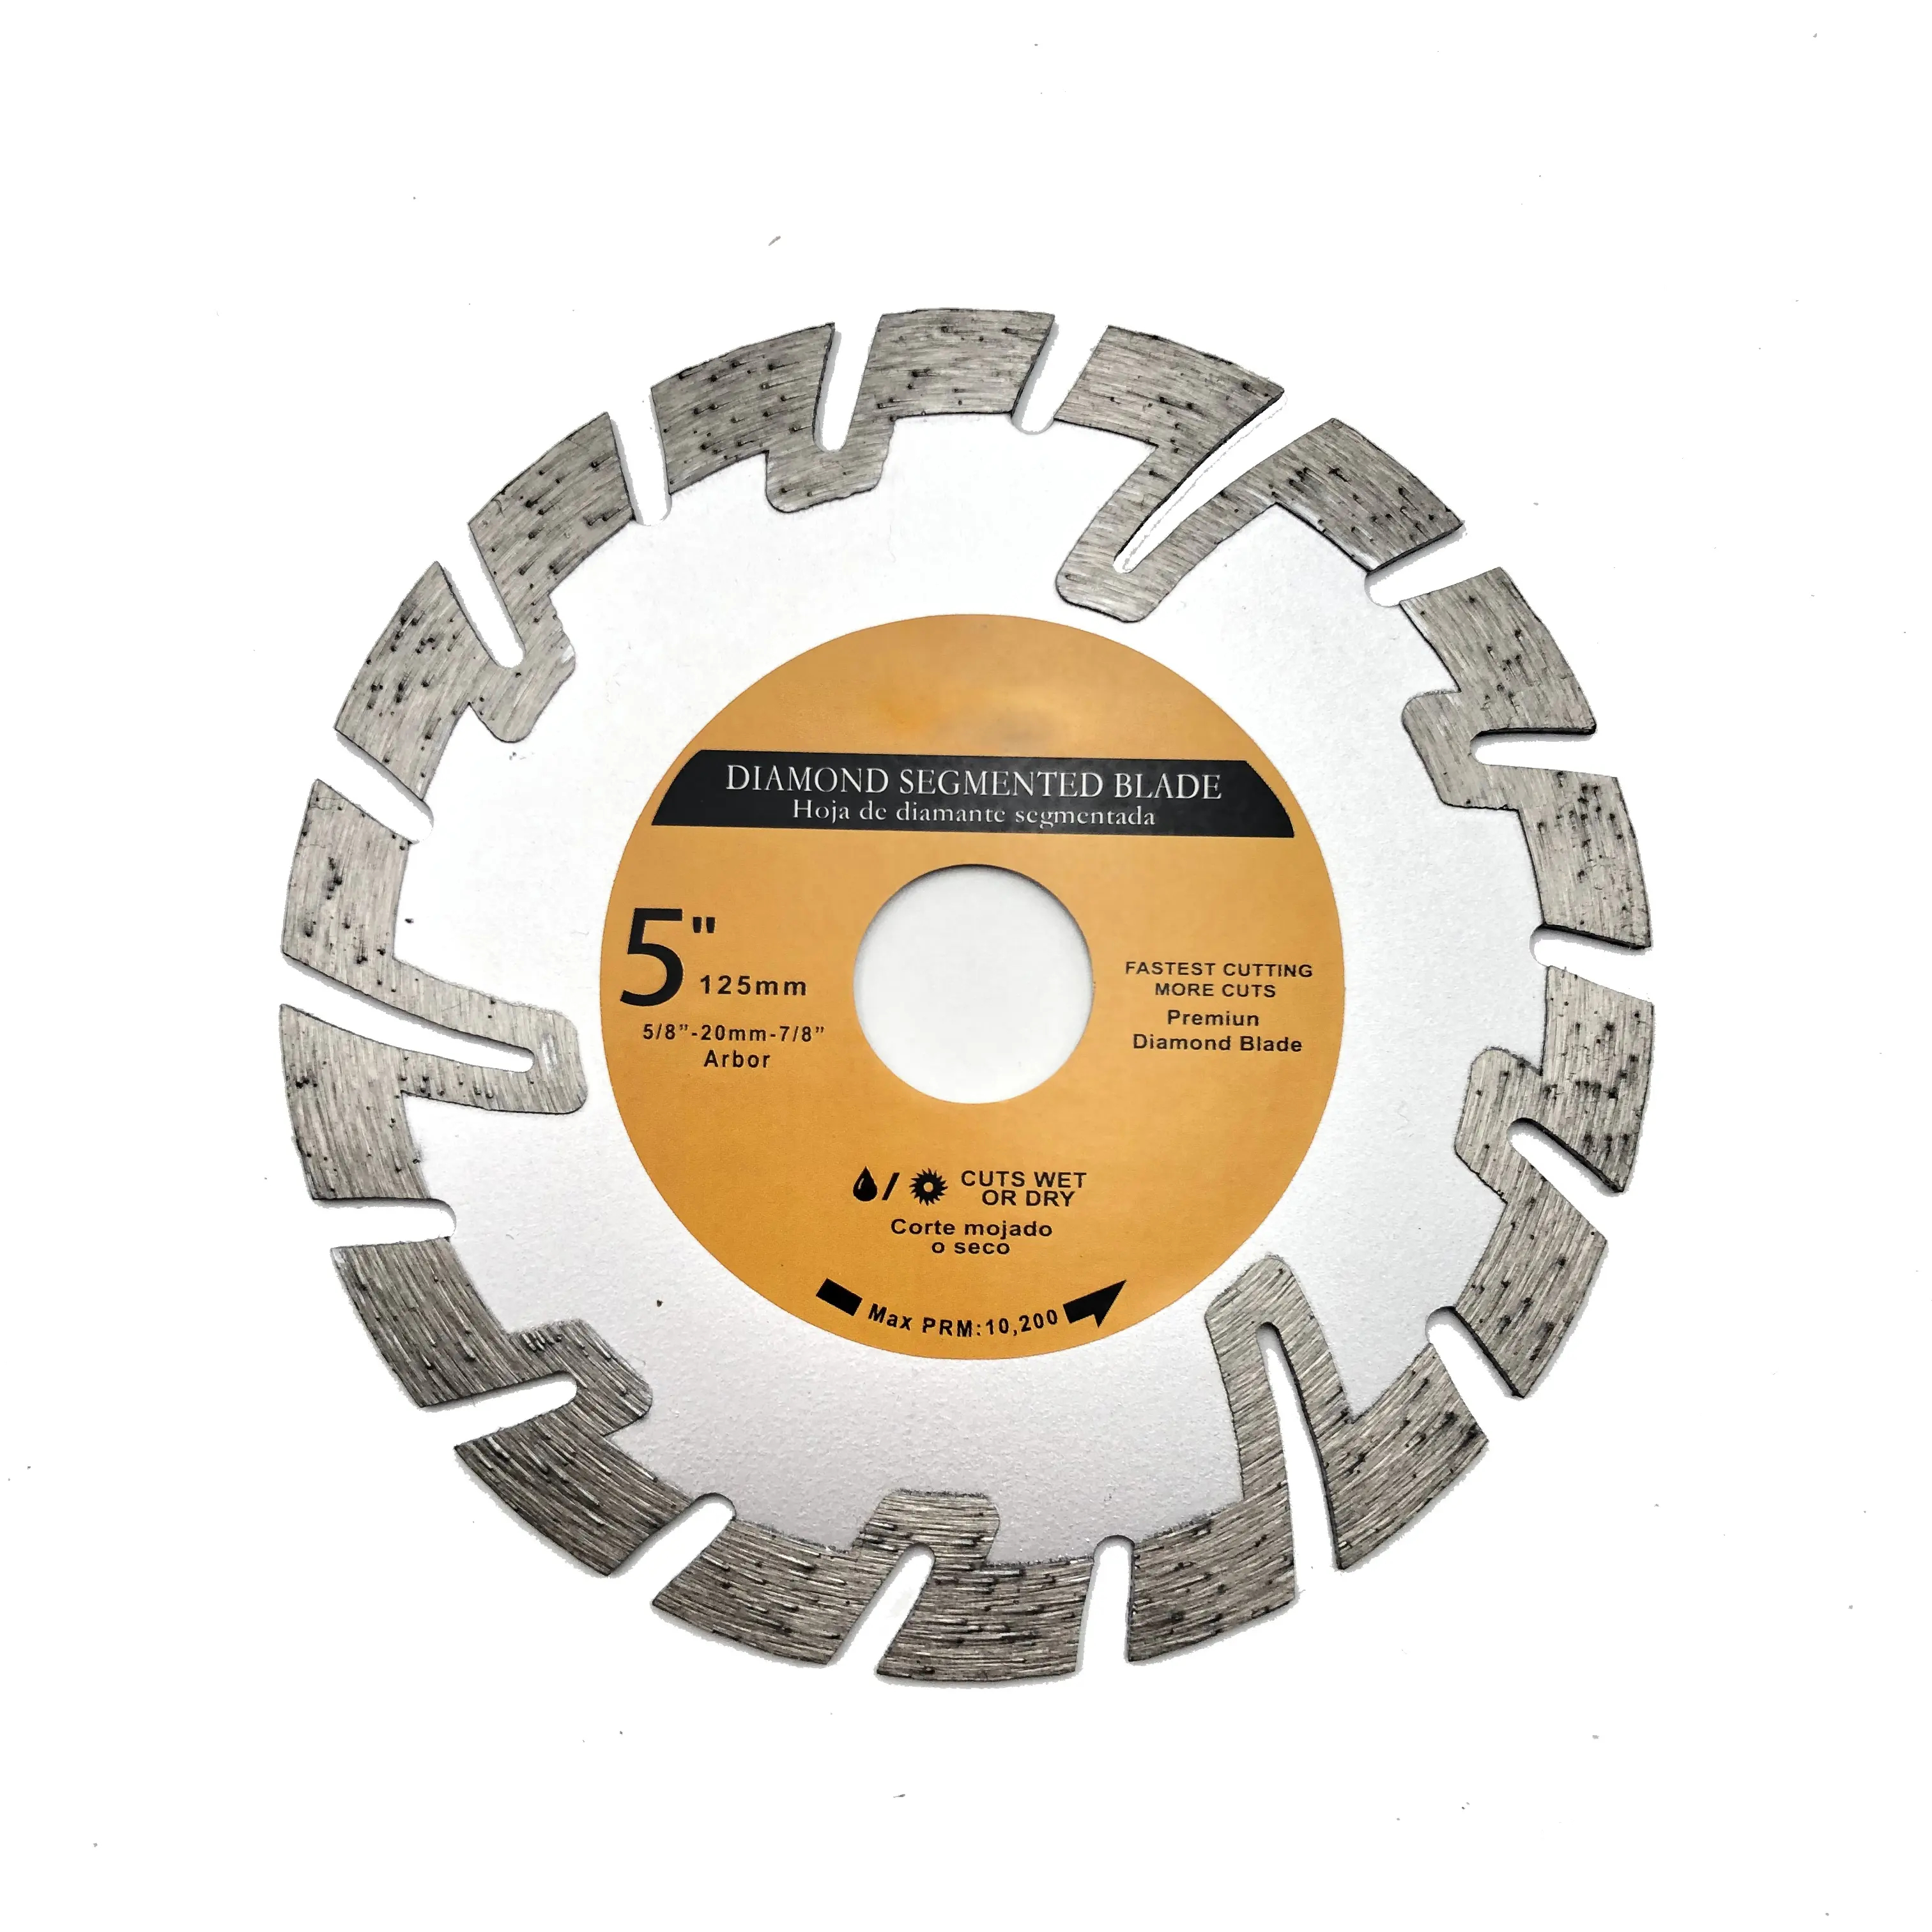 Hantechn@ Double Row Grinding Wheel 5" PCD Concrete Polishing Wheels Metal Grinding Disc